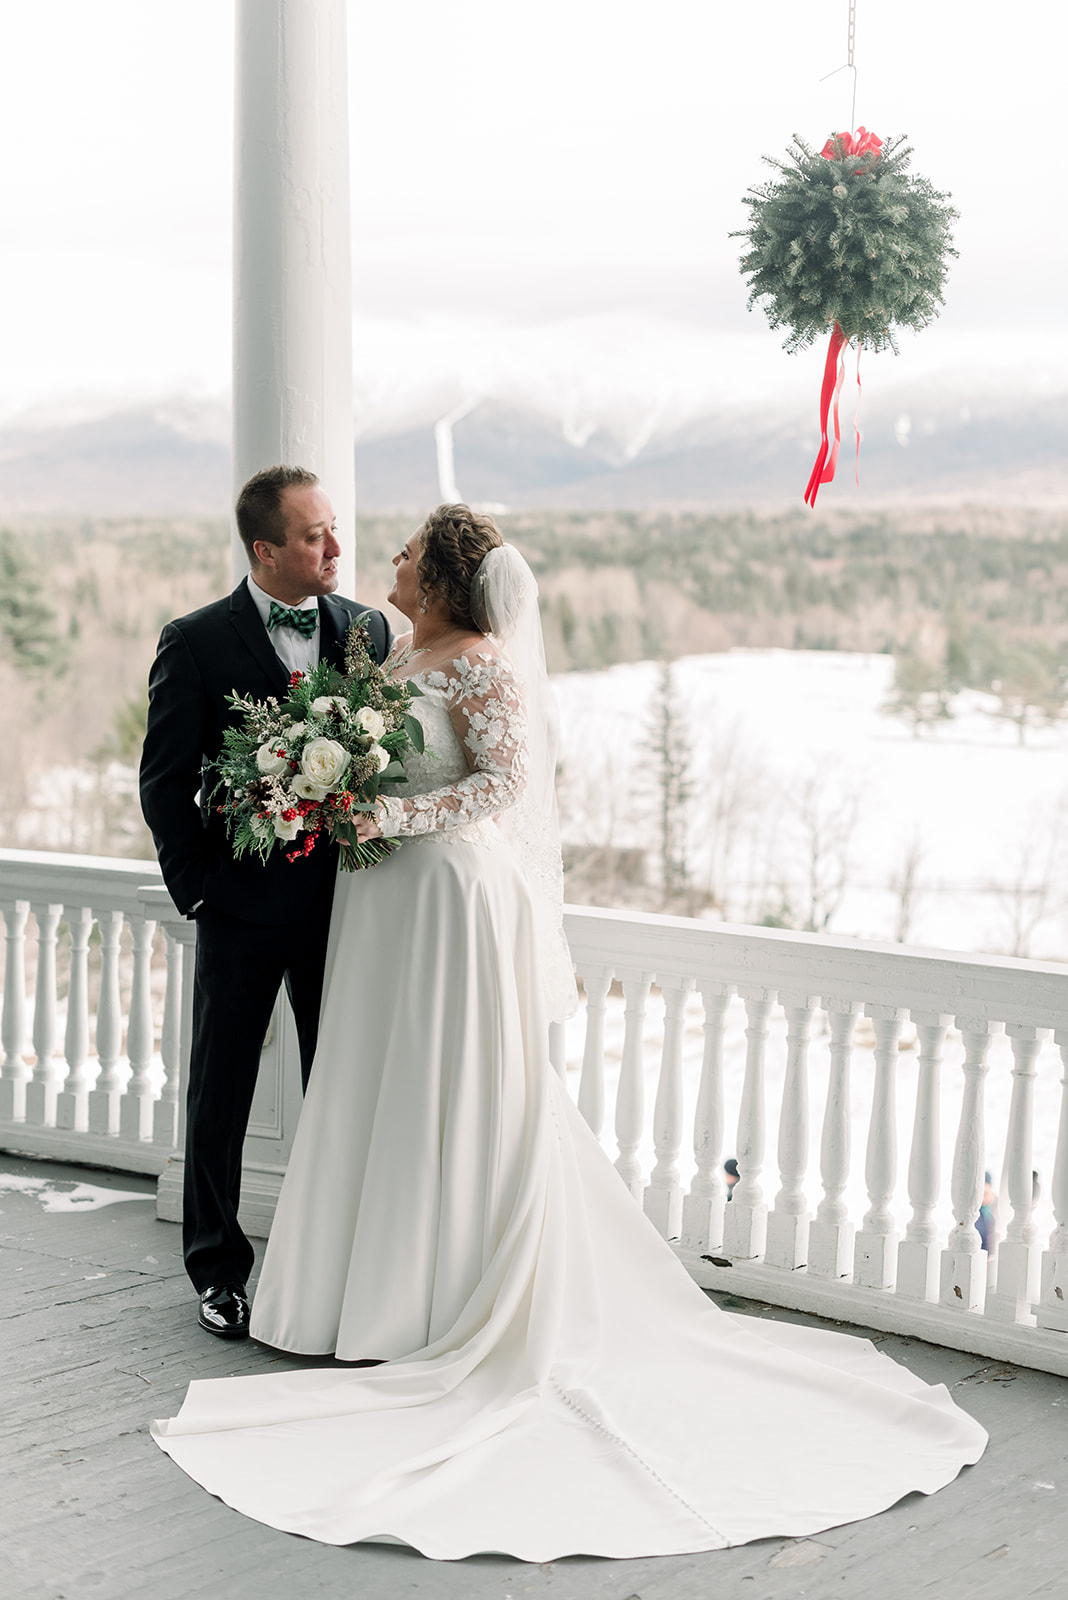 A winter wedding at the Omni Mount Washington Resort in New Hampshire. 
Molly Breton & Co.